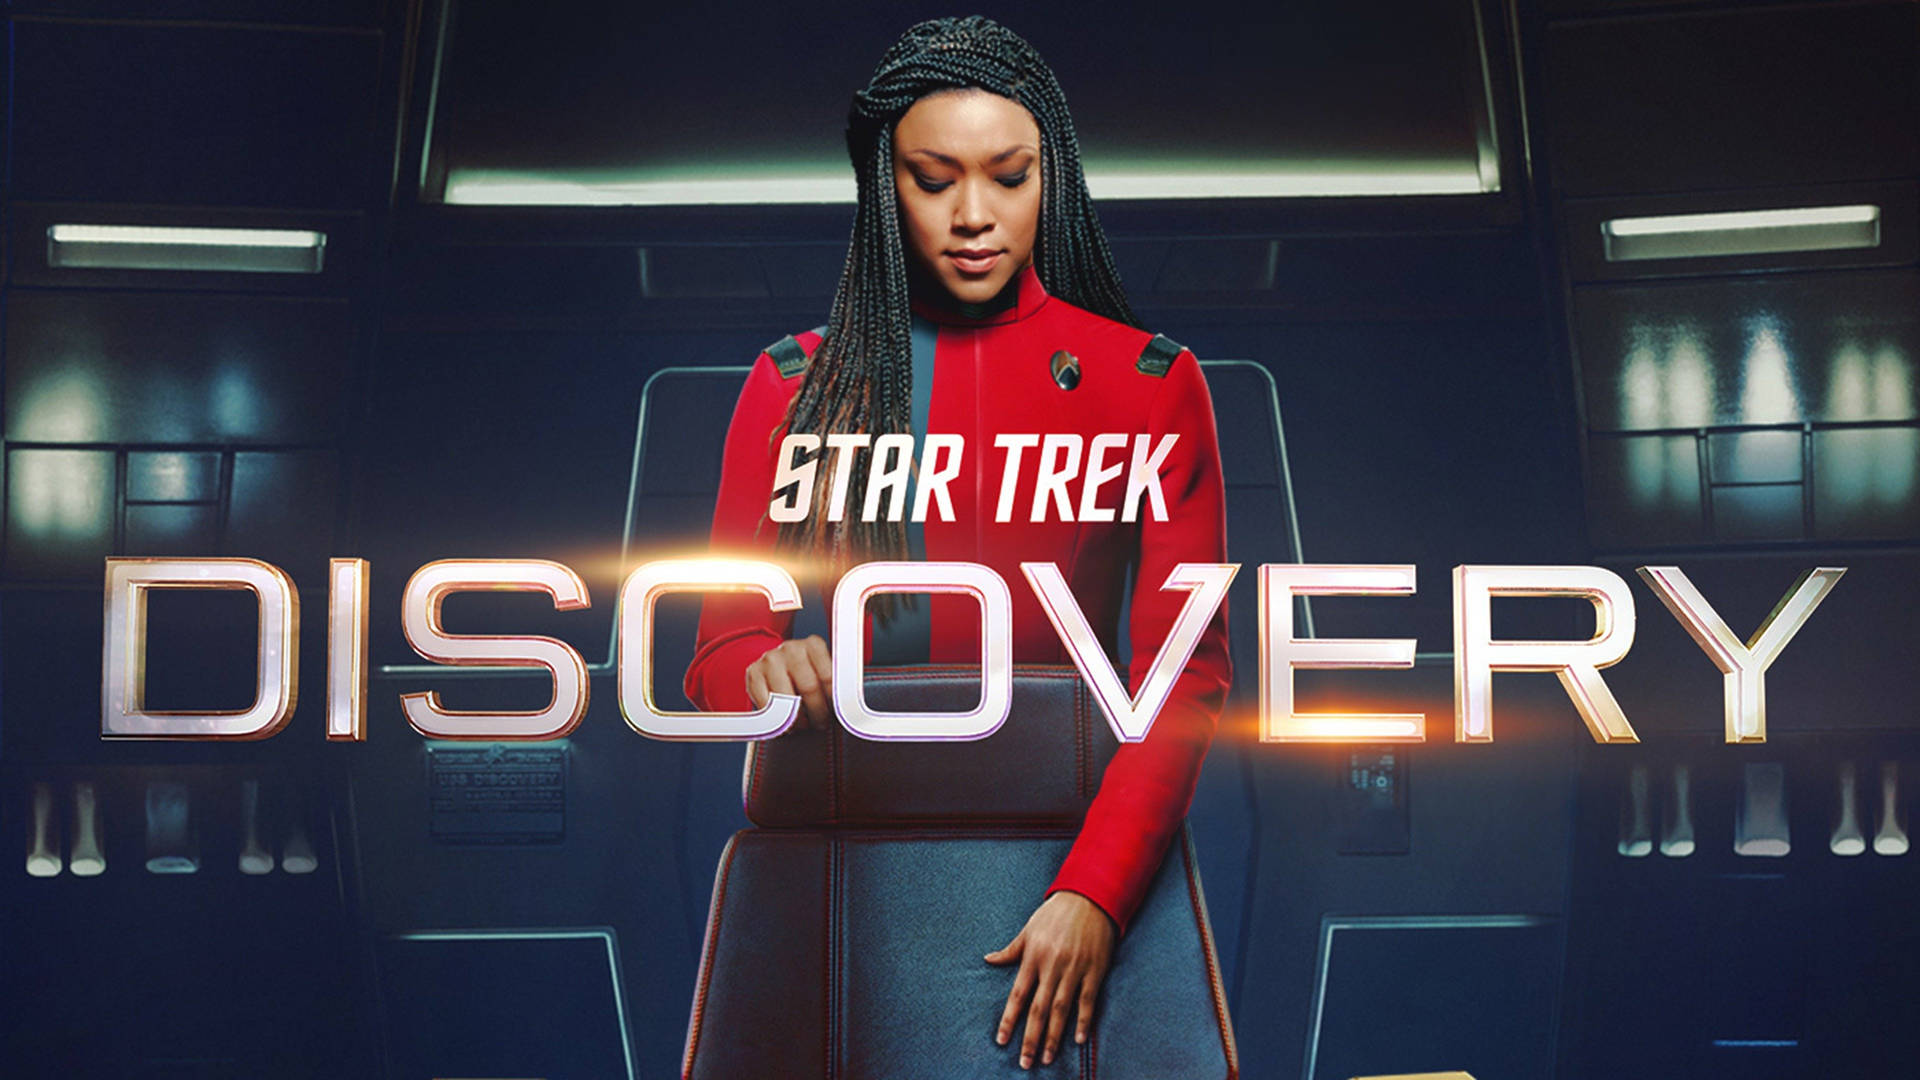 Star Trek Discovery Season 4 Poster Wallpaper